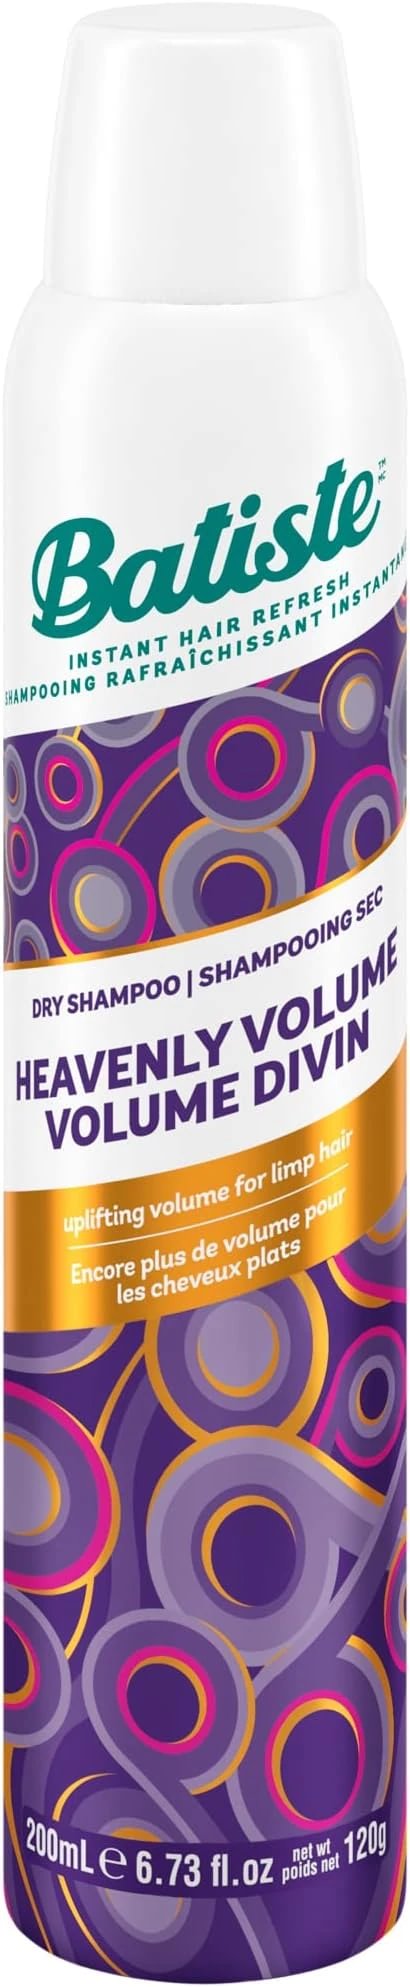 Batiste Heavenly Volume dry shampoo 200ml